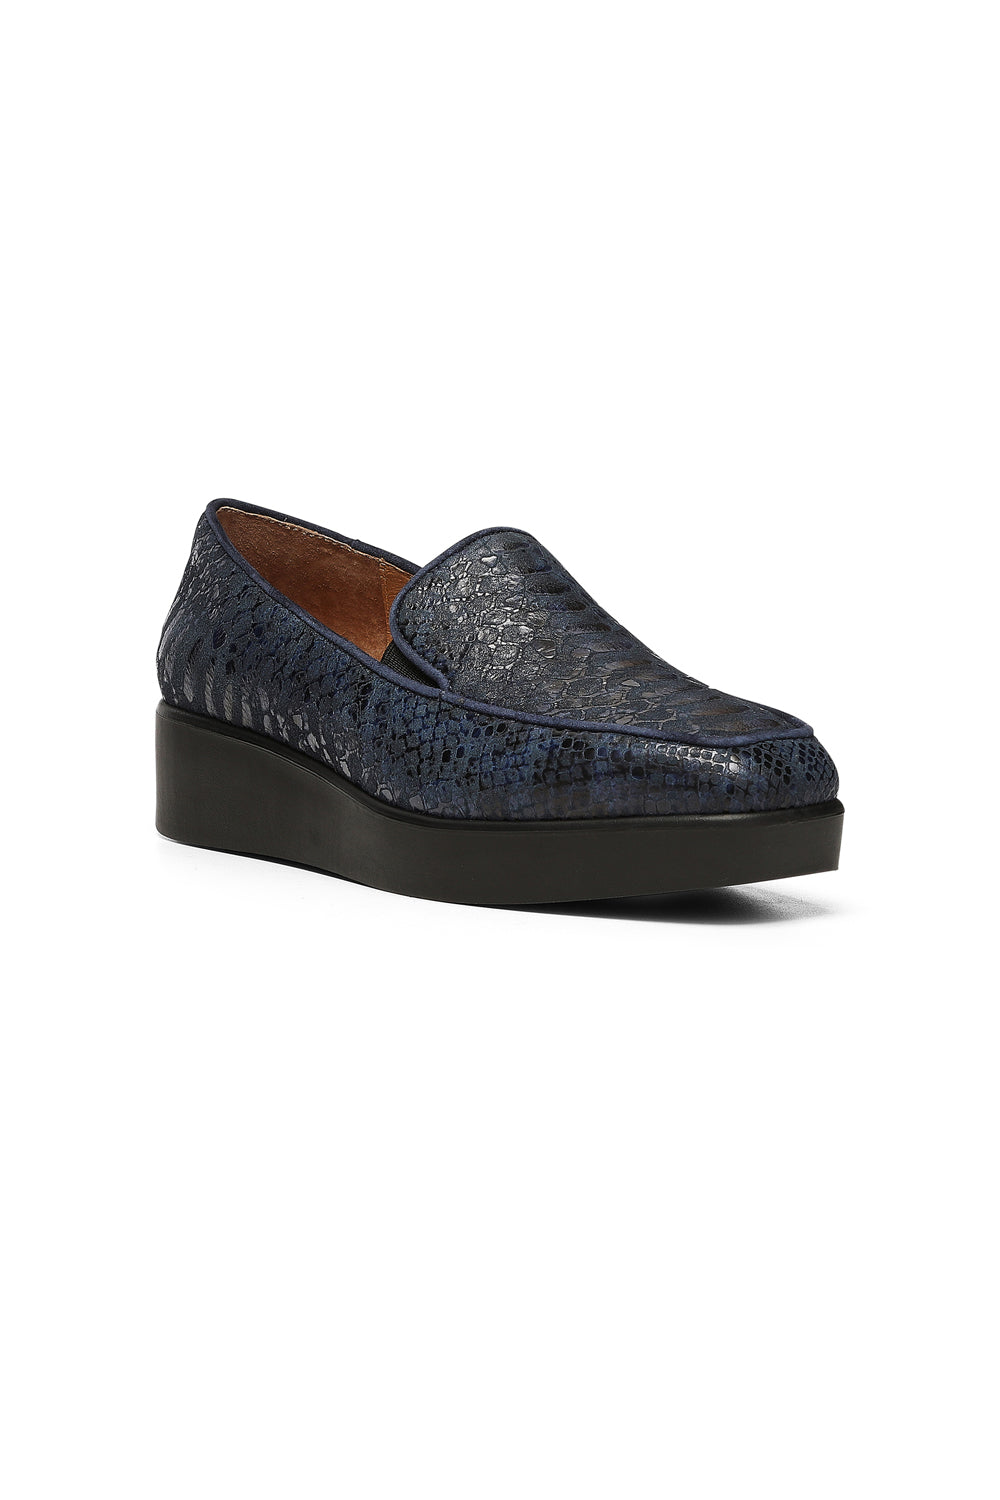 NYDJ Gira Slip-On Loafers In Python Print Leather - Navy